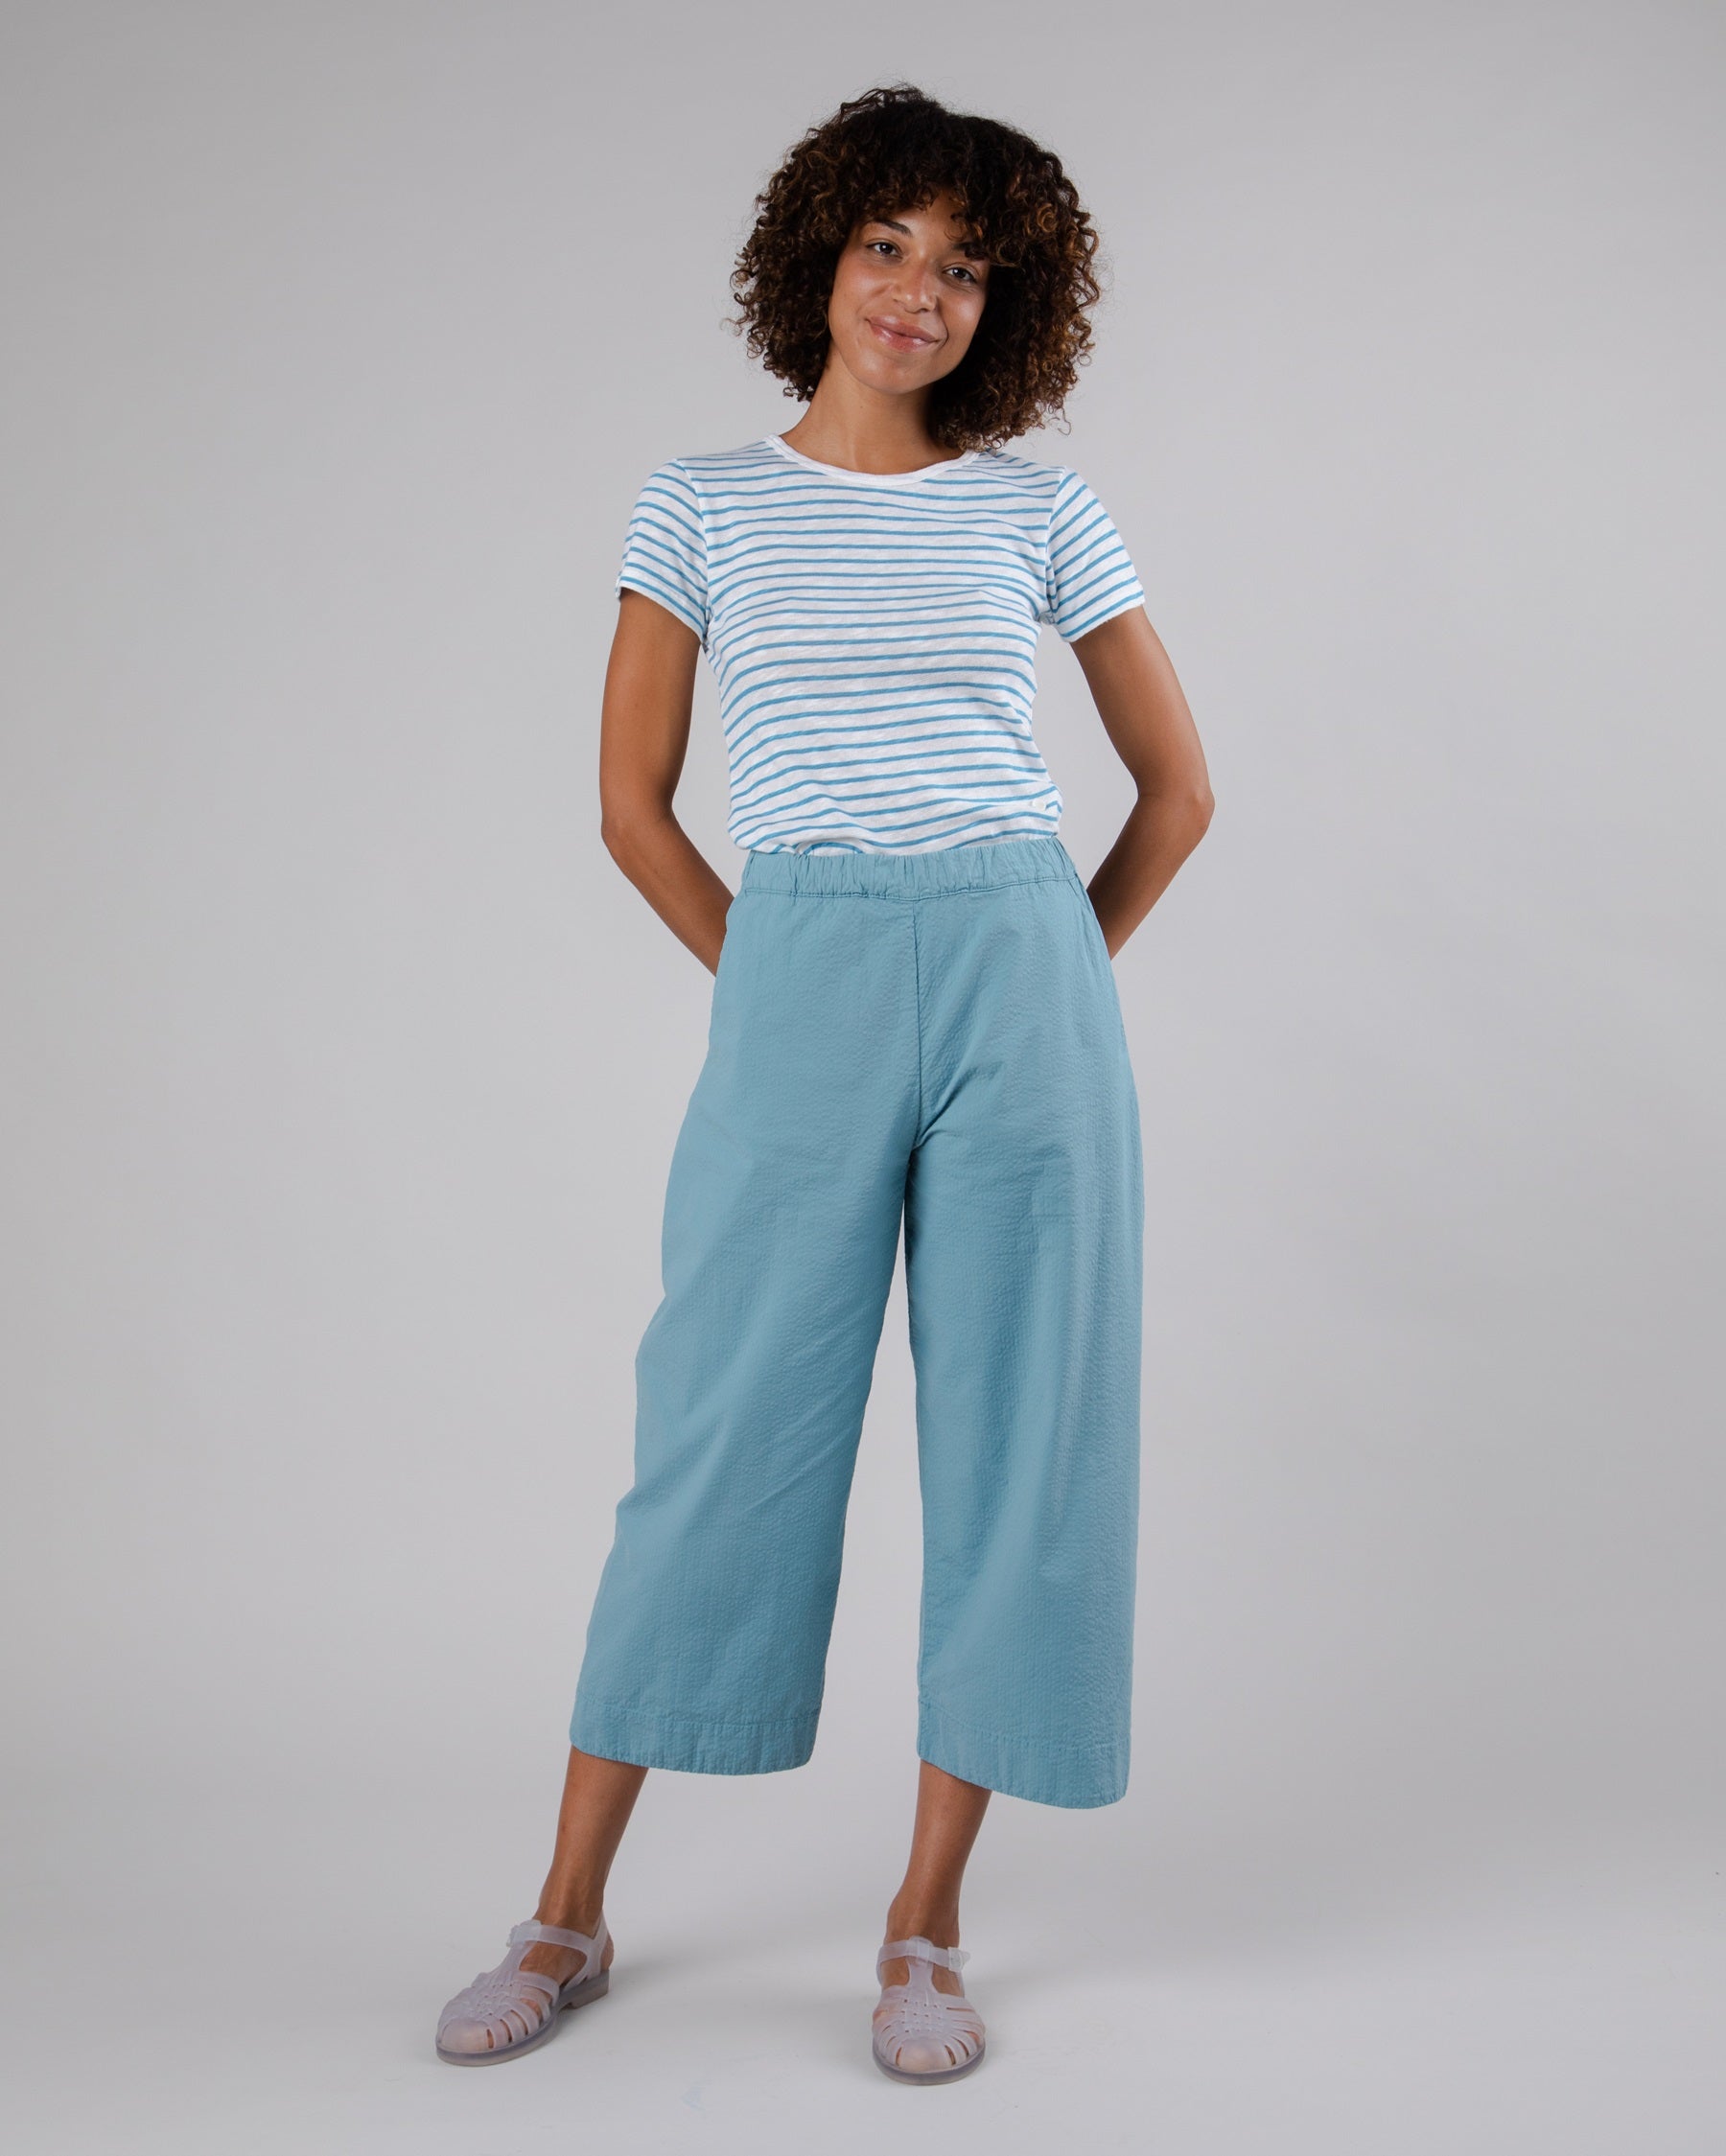 Women's Slim Fit Blue Striped T-Shirt